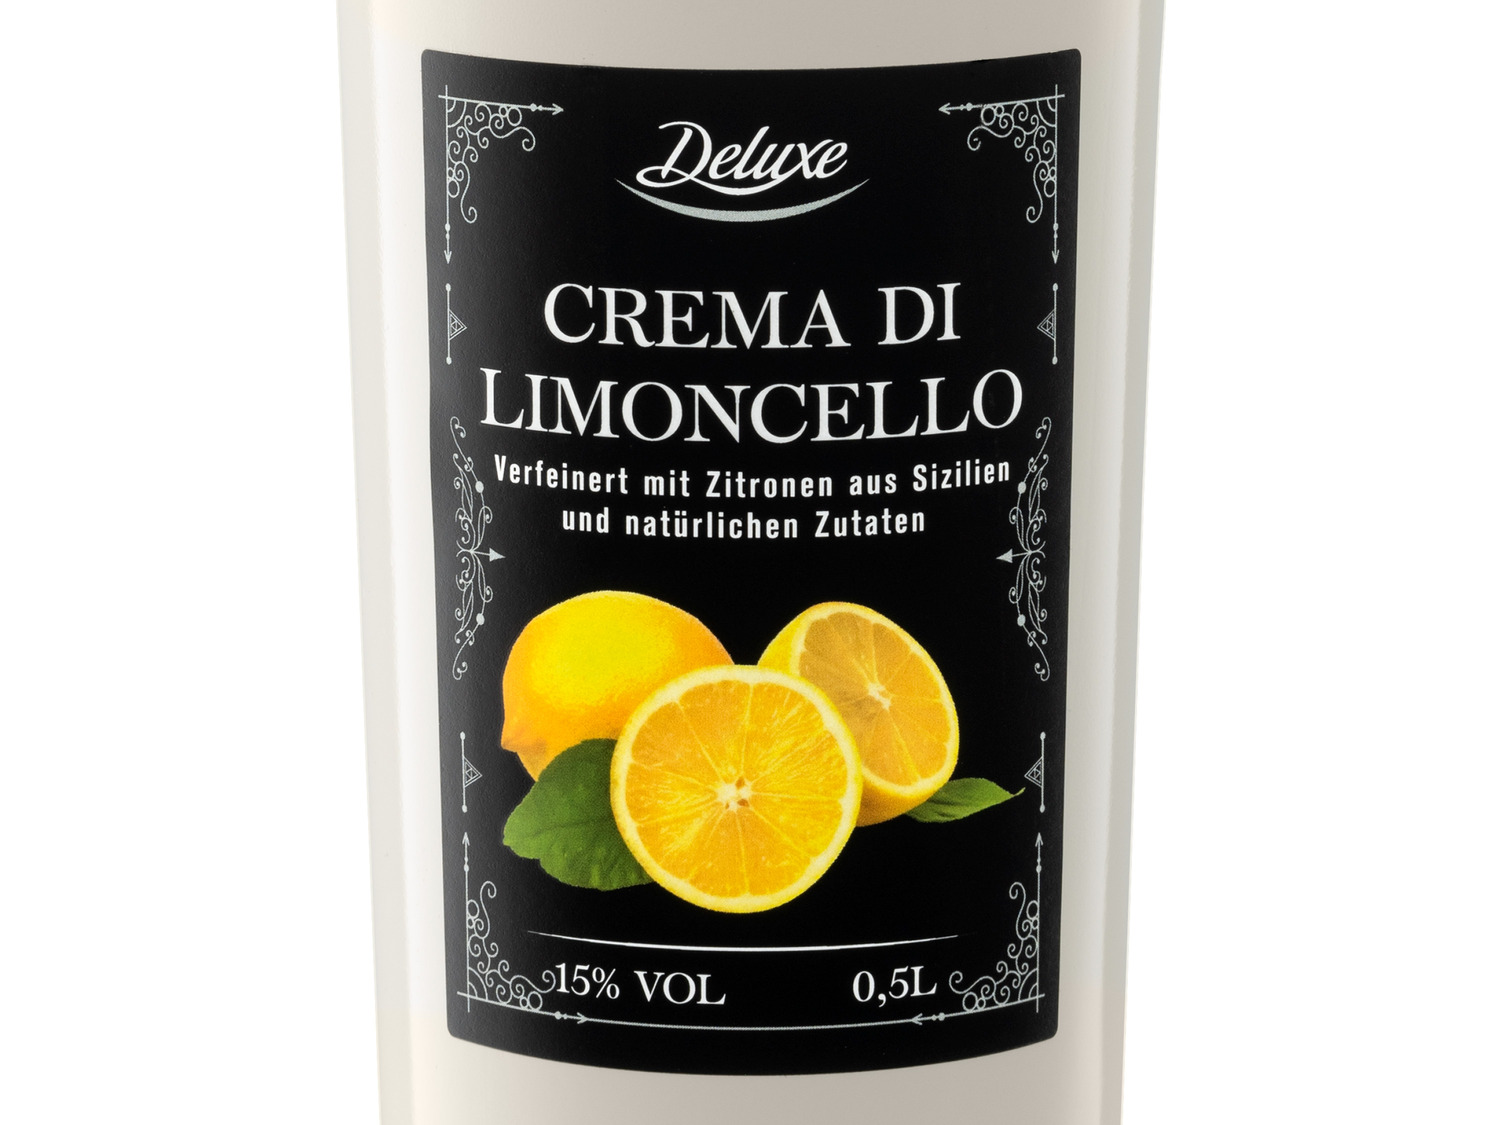 DELUXE Crema di Limoncello 15% LIDL | online kaufen Vol